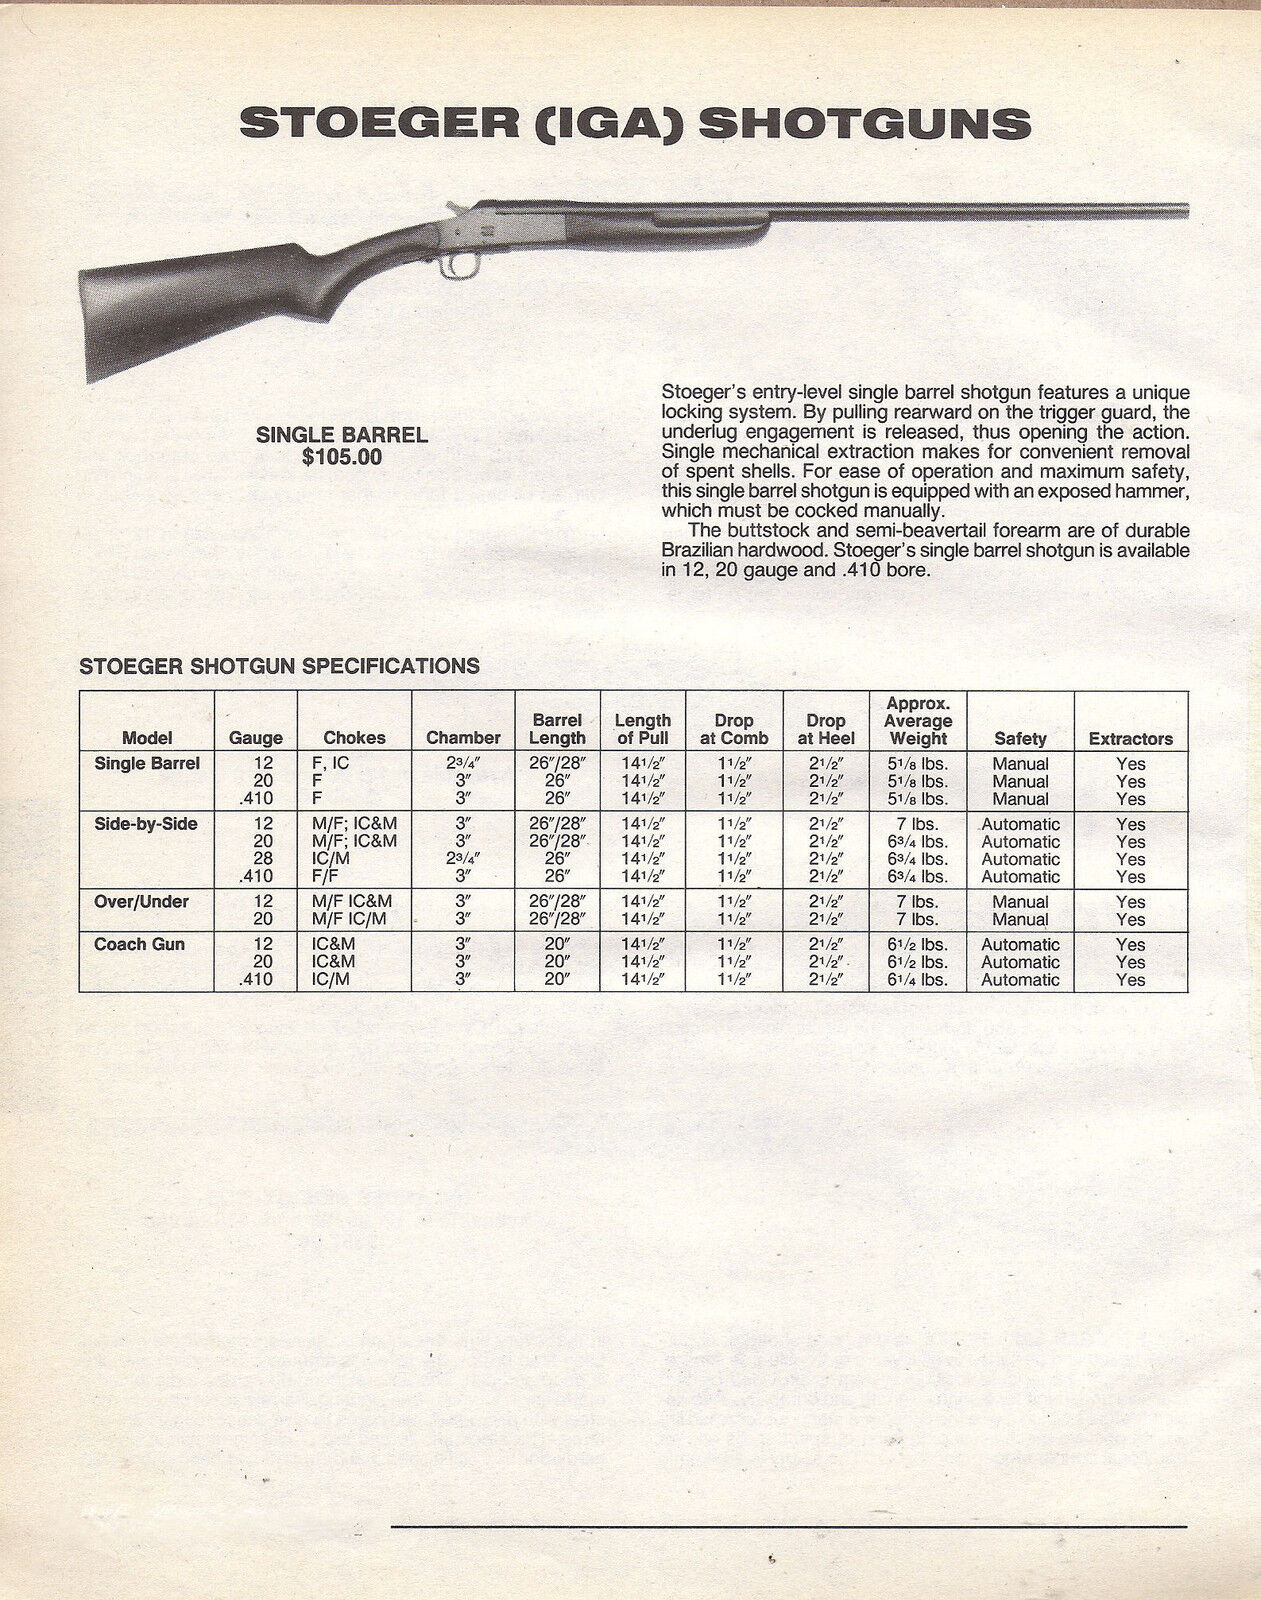 1992 Stoeger (IGA) Single Barrel Shotgun AD w/ specs & price